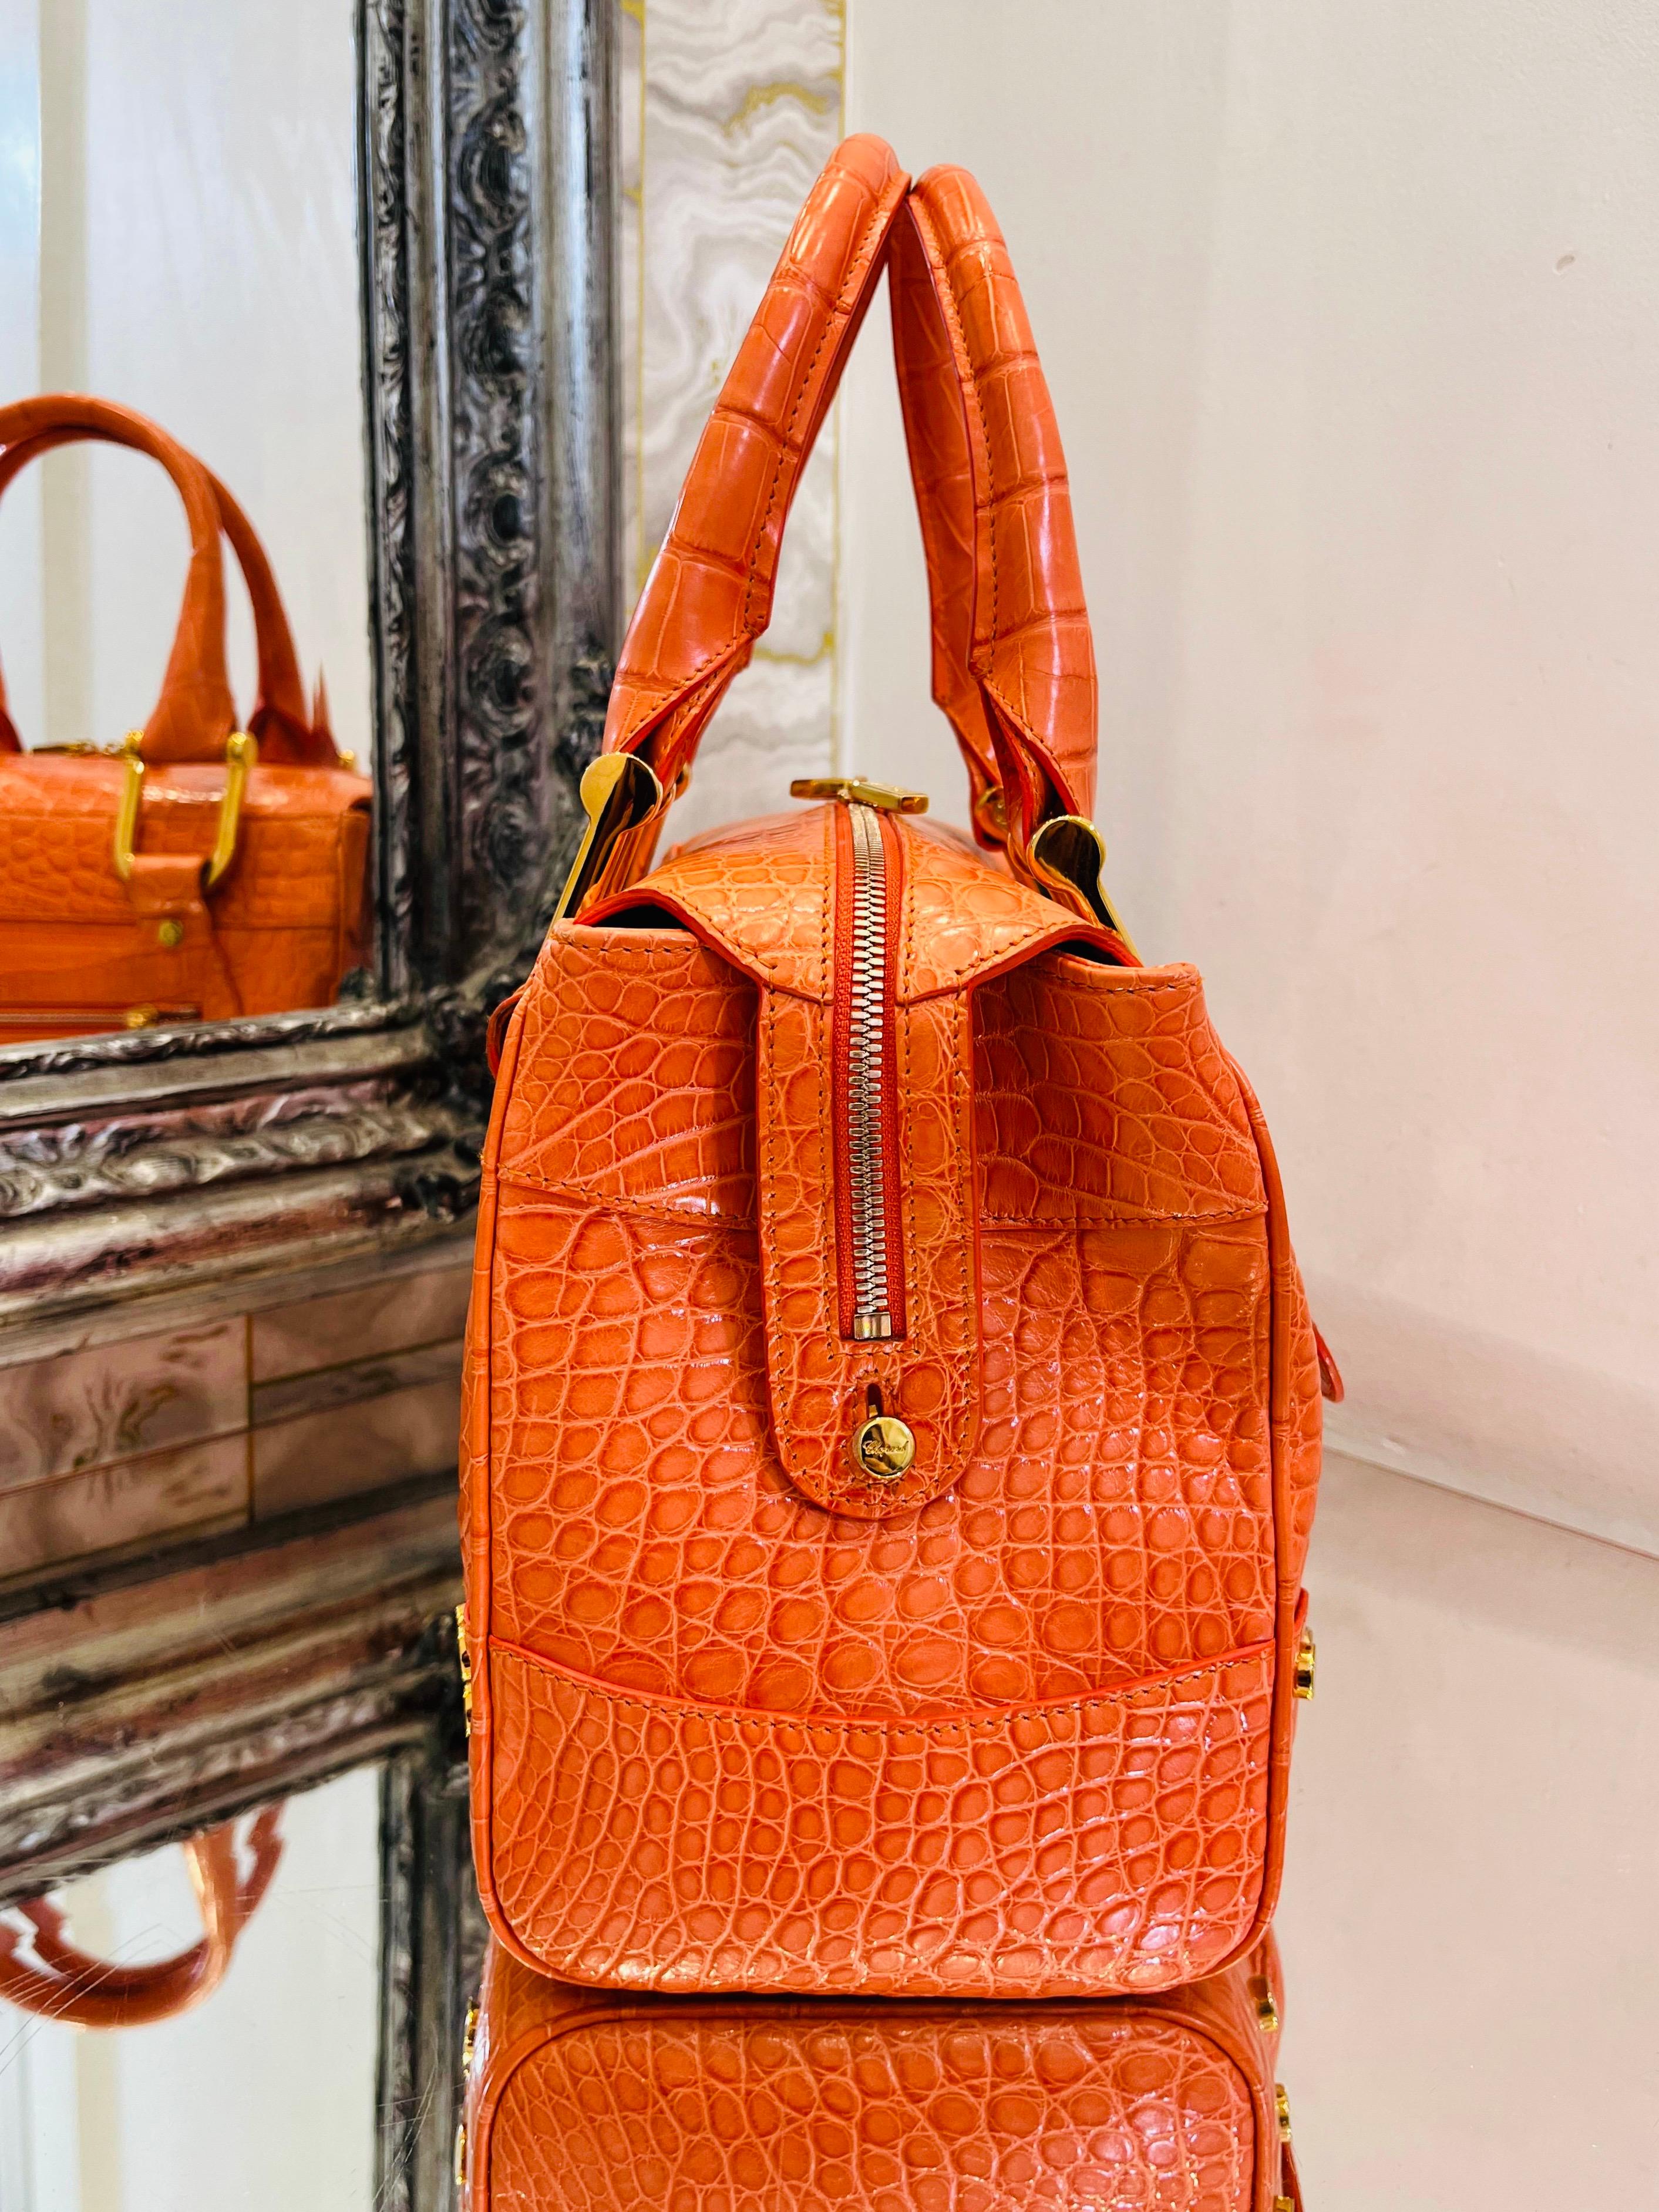 Chopard Crocodile Skin Carolina Bag In Excellent Condition For Sale In London, GB